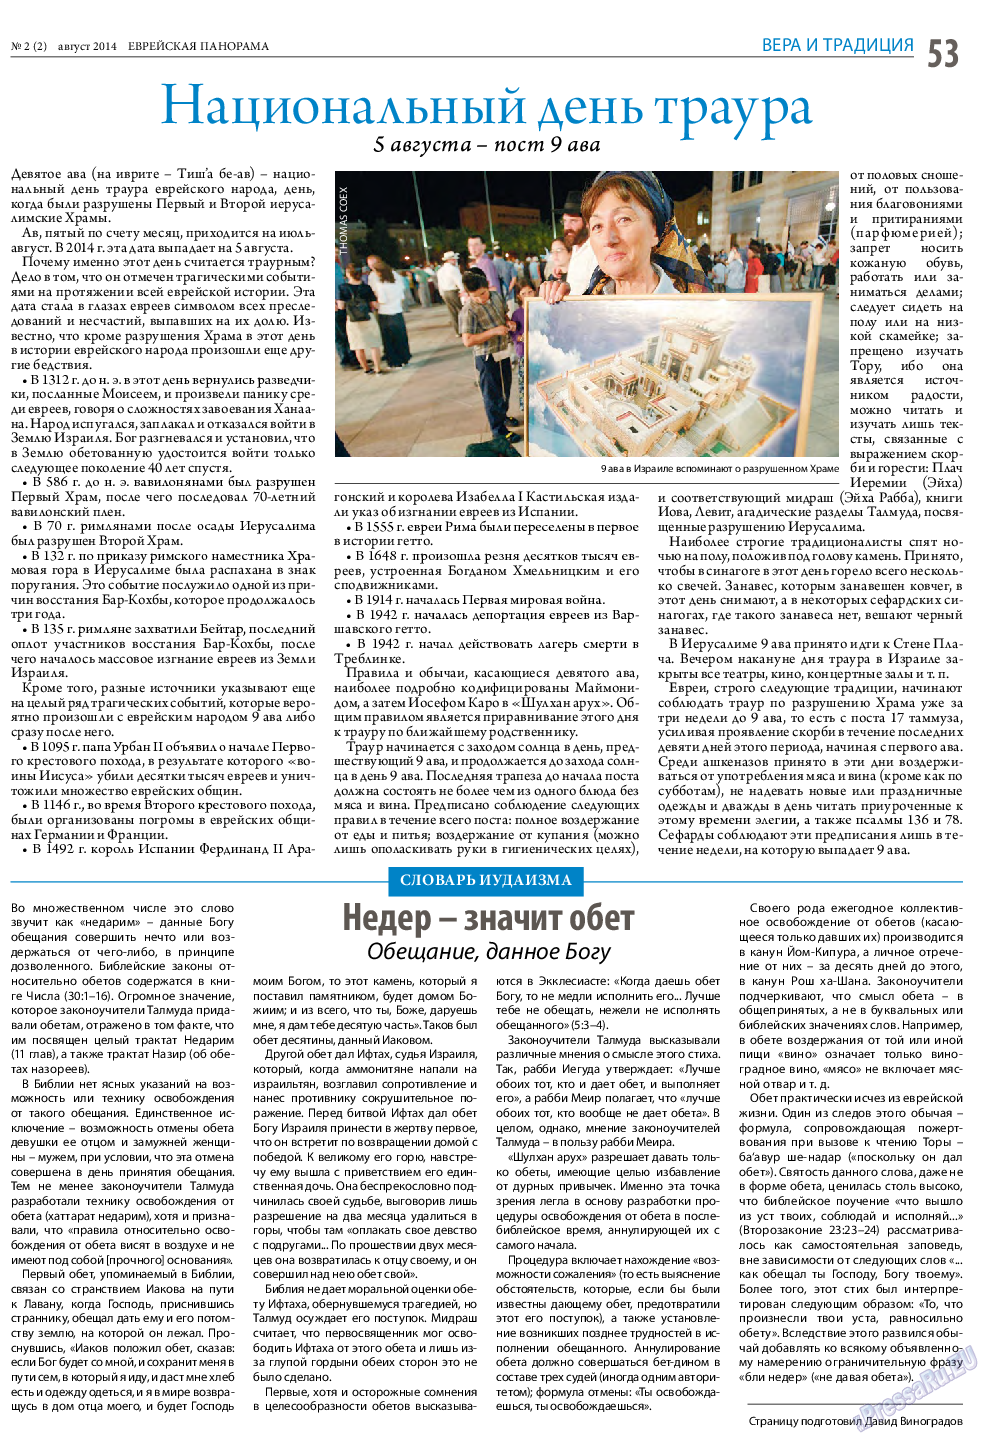 Еврейская панорама, газета. 2014 №2 стр.53